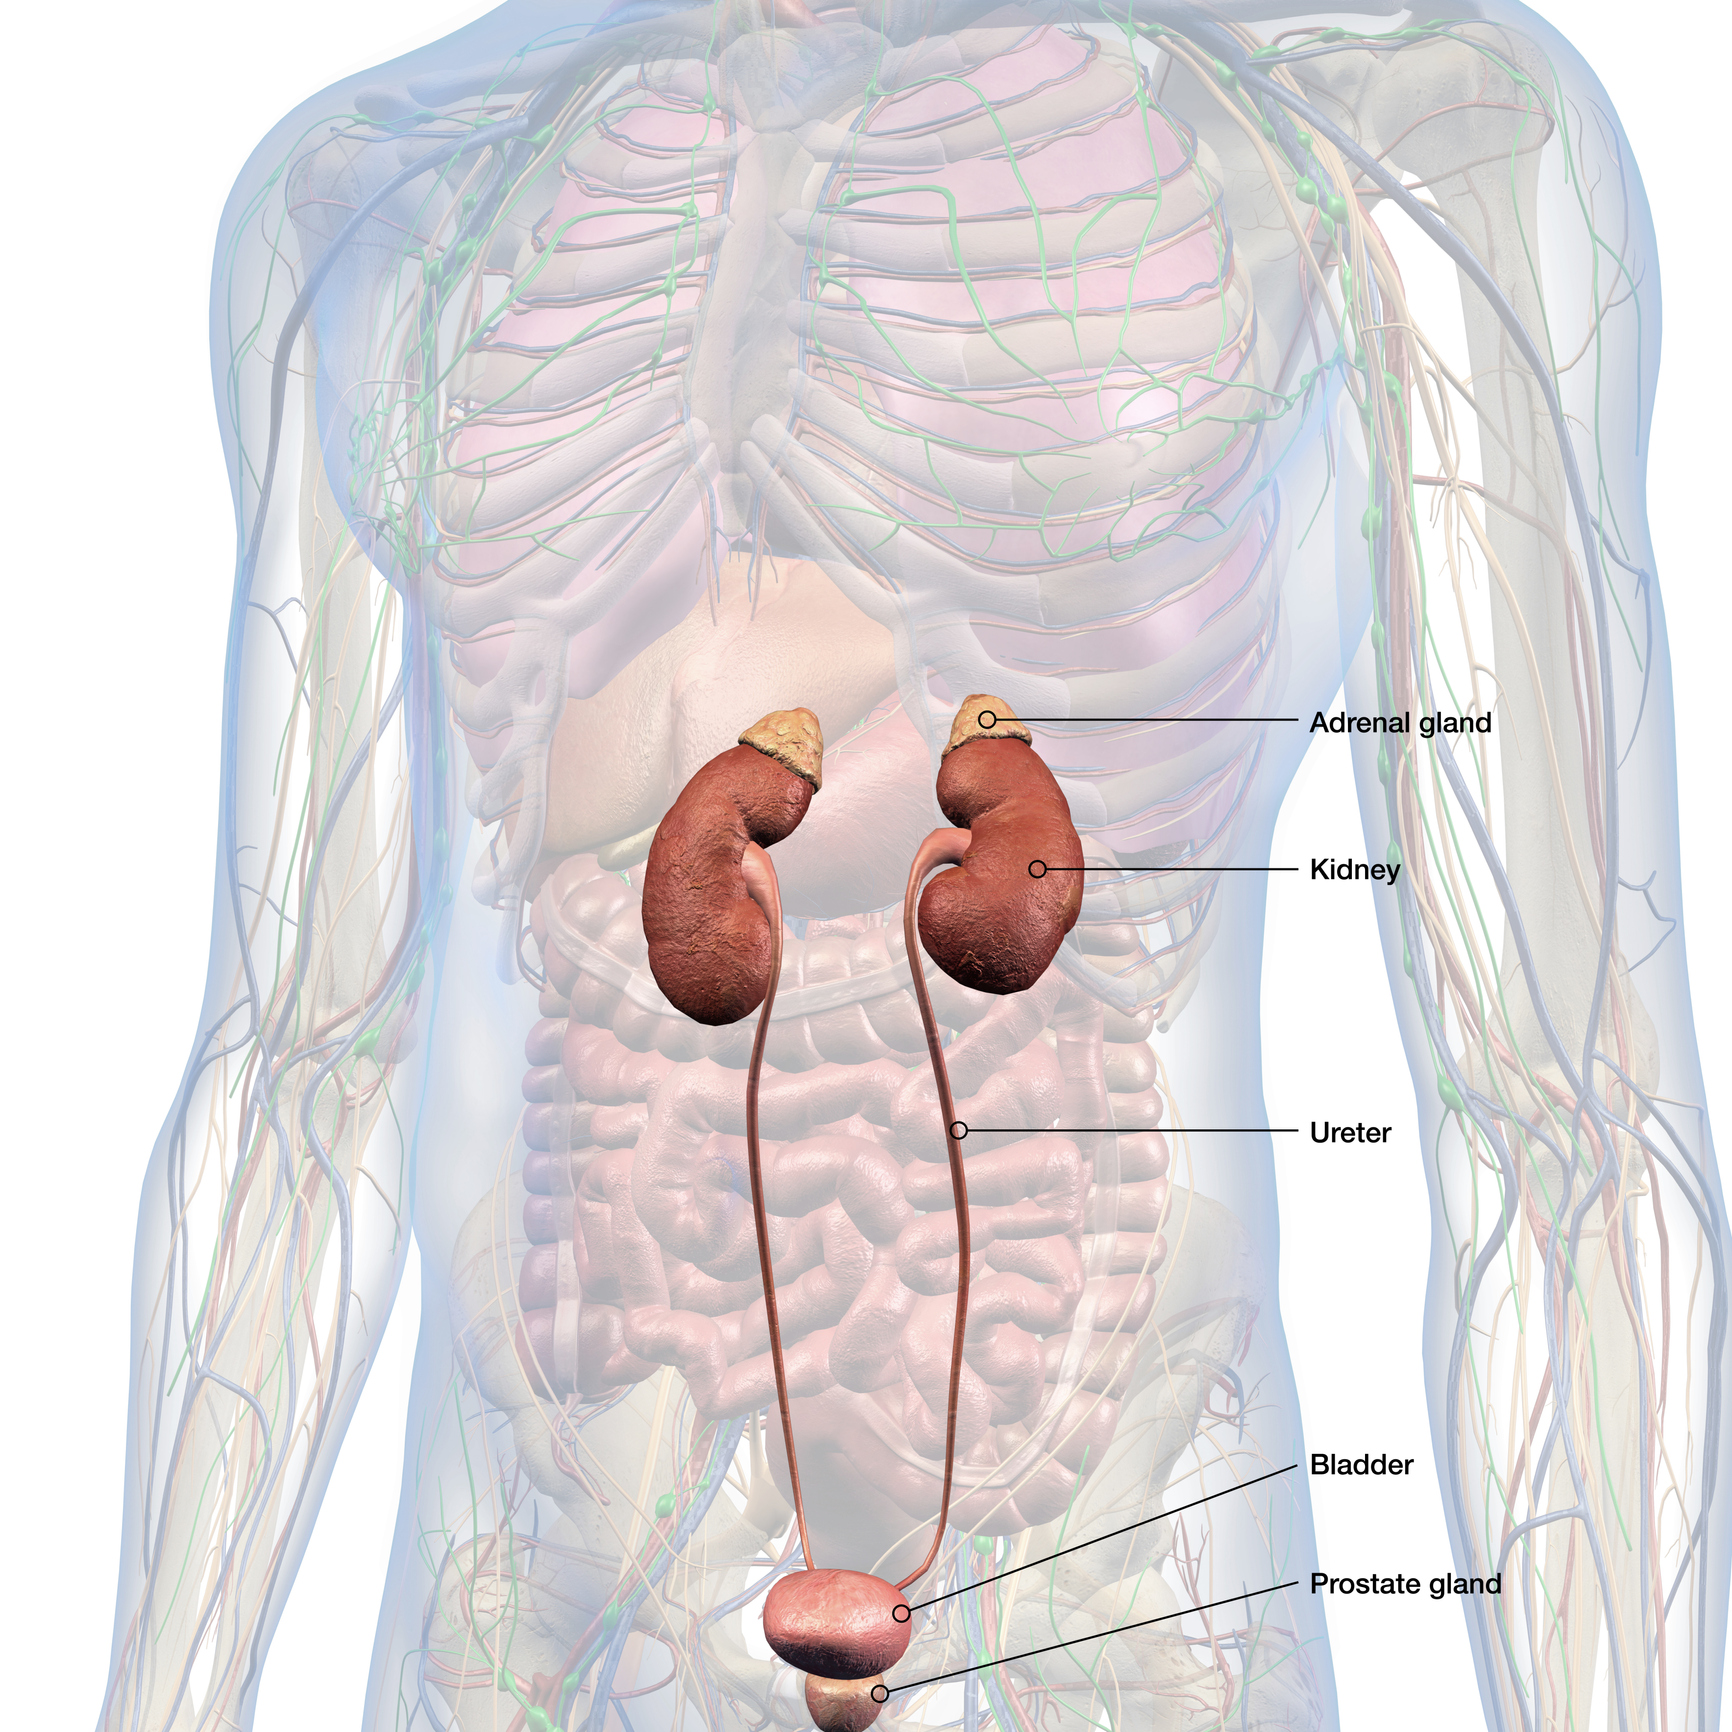 symptoms of an adrenal tumor